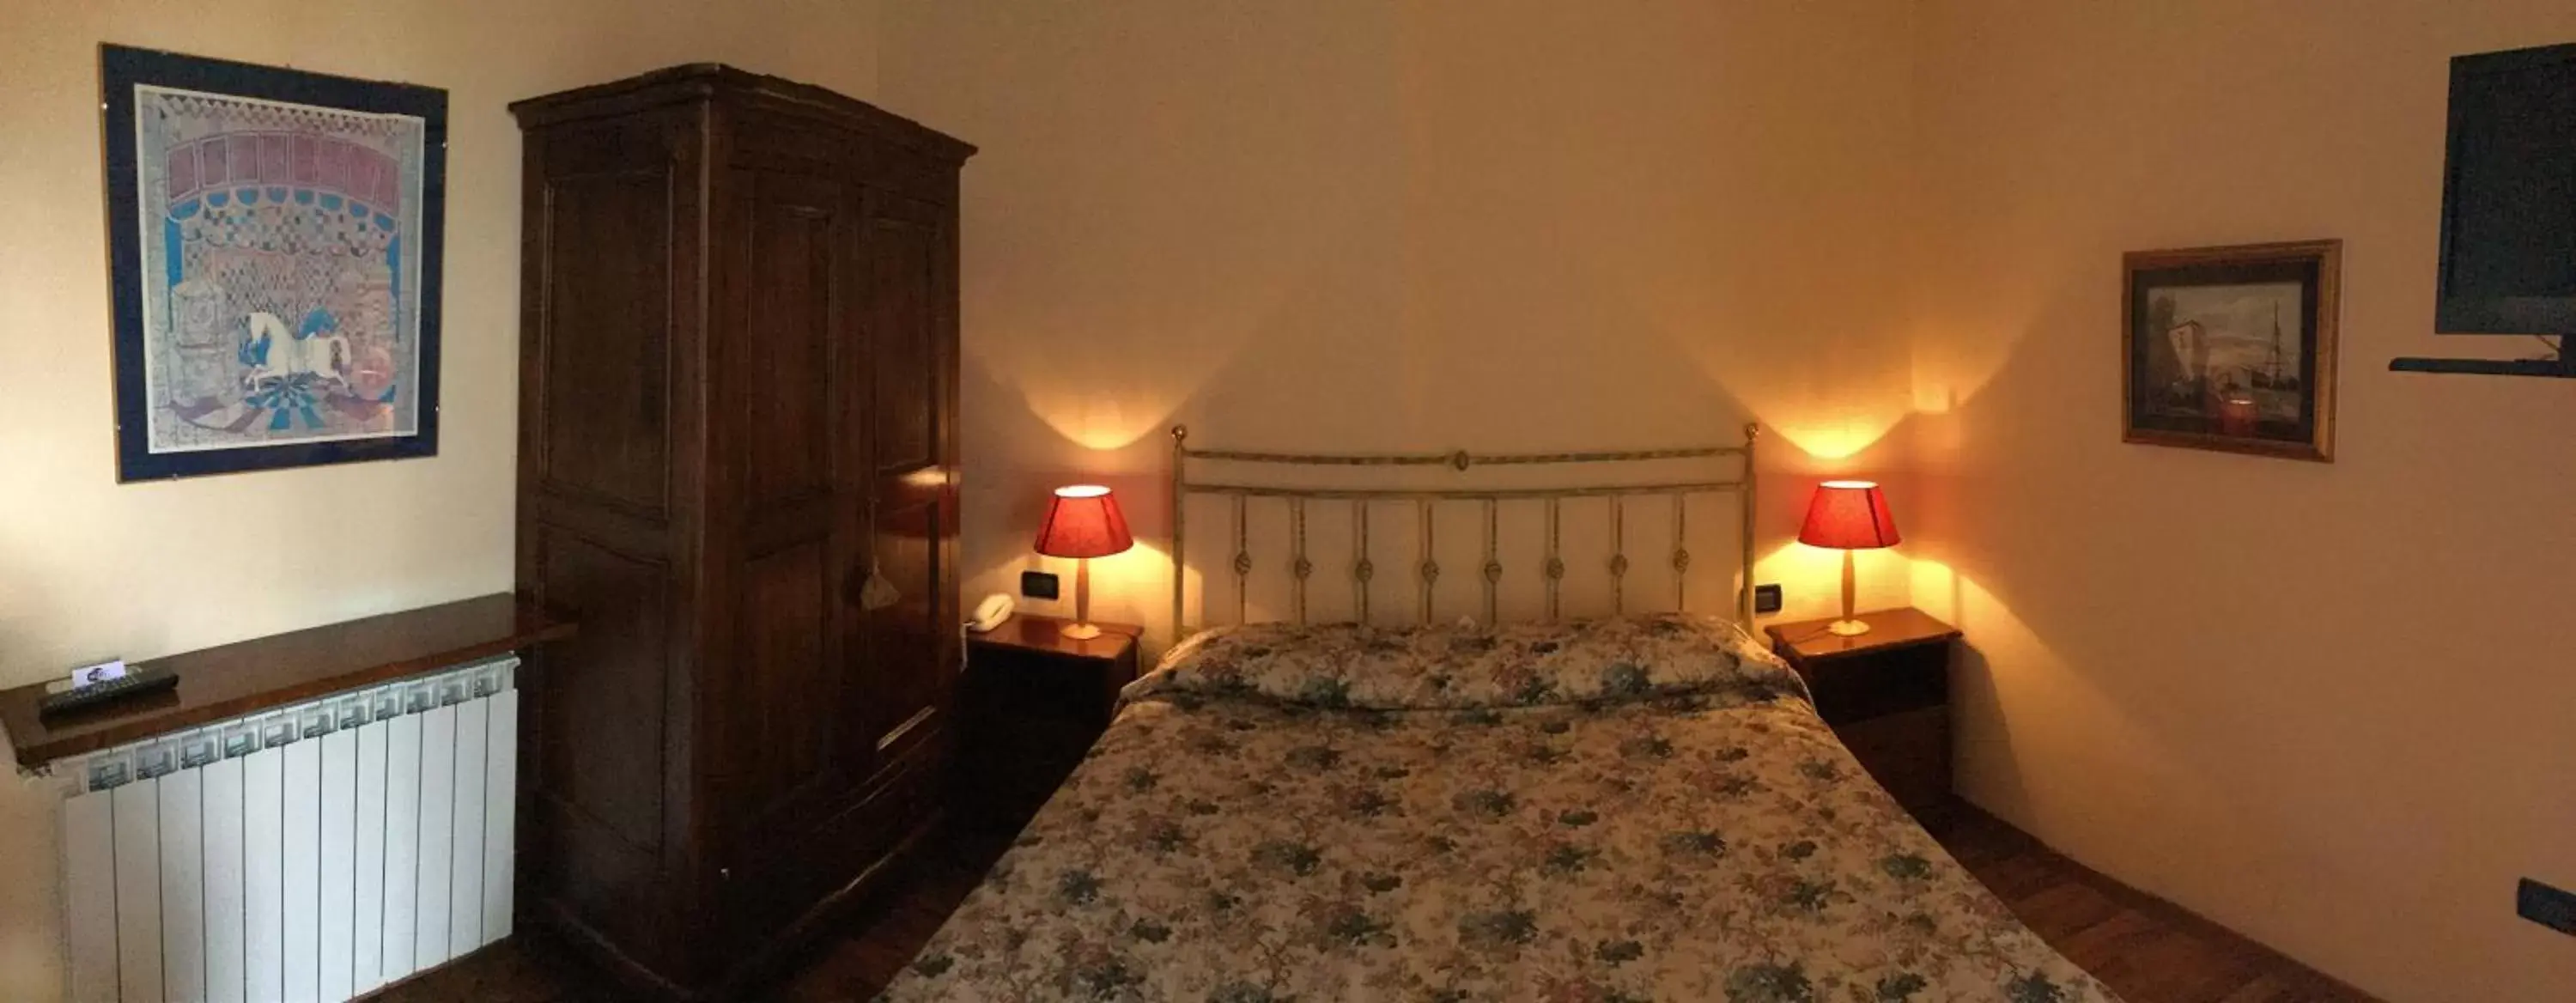 Bed, Room Photo in Soggiorno Michelangelo